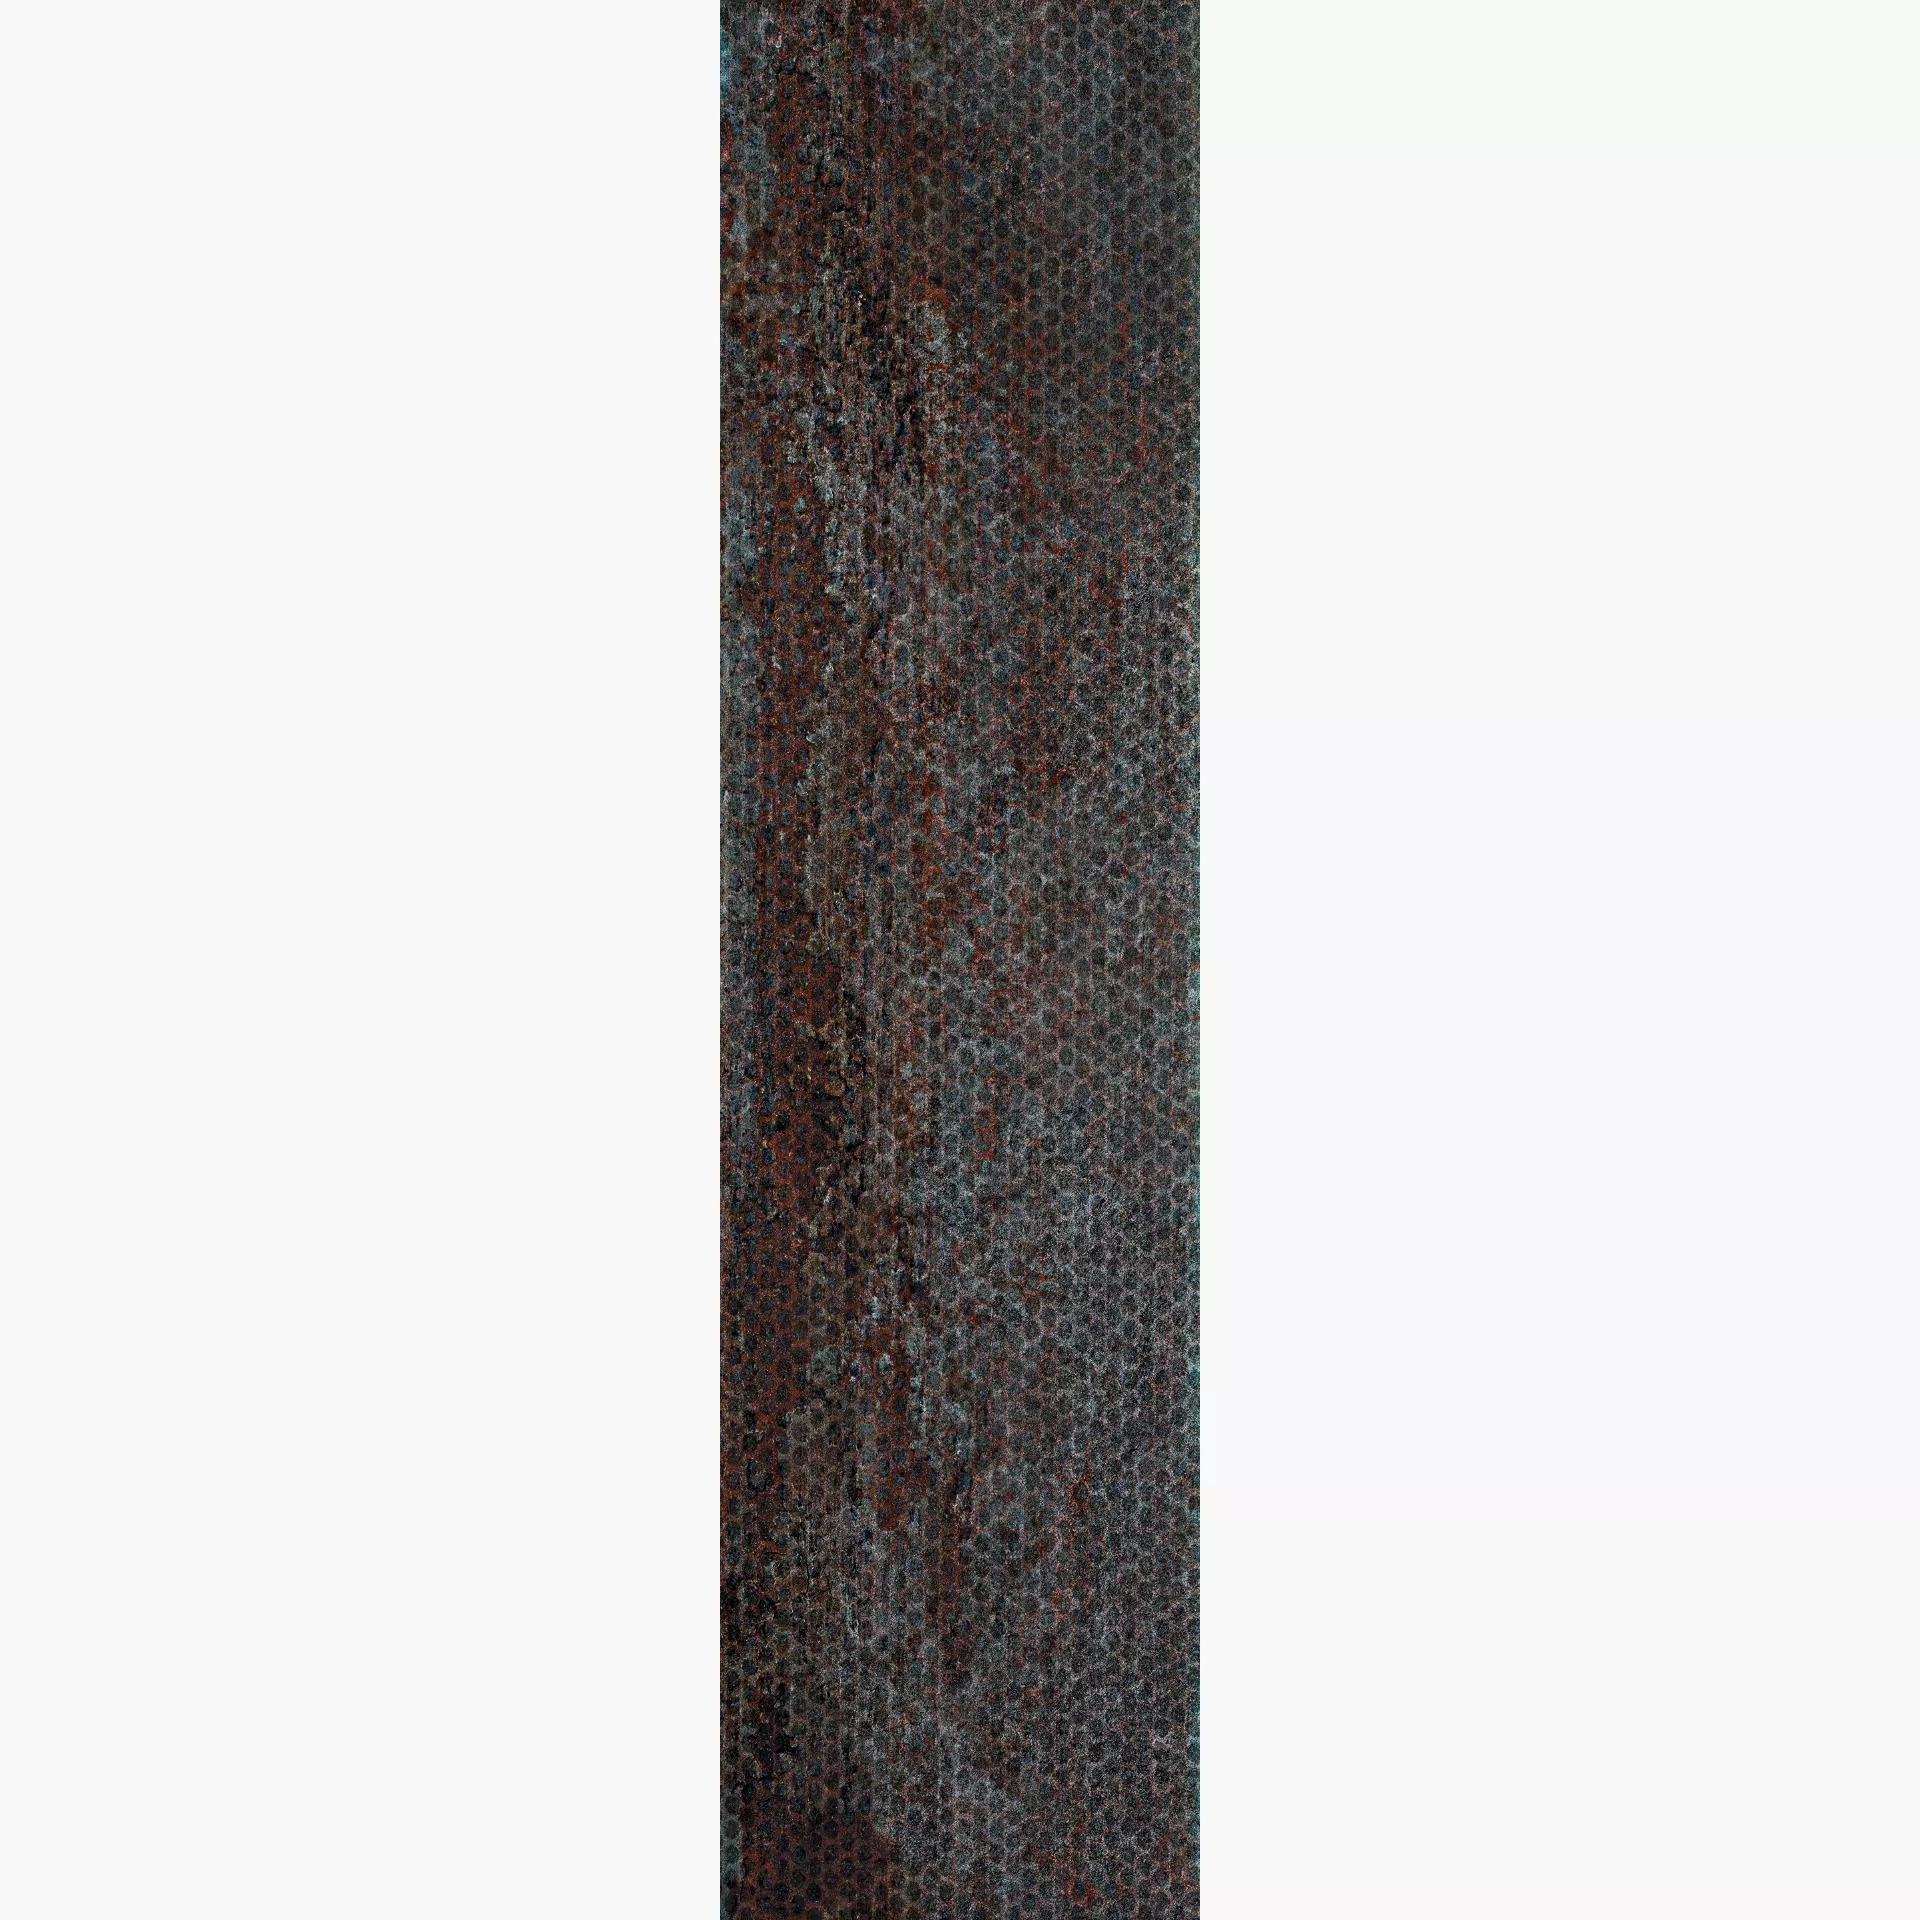 Serenissima Costruire Ruggine Naturale Decor Strong 1062818 30x120cm rectified 9,5mm